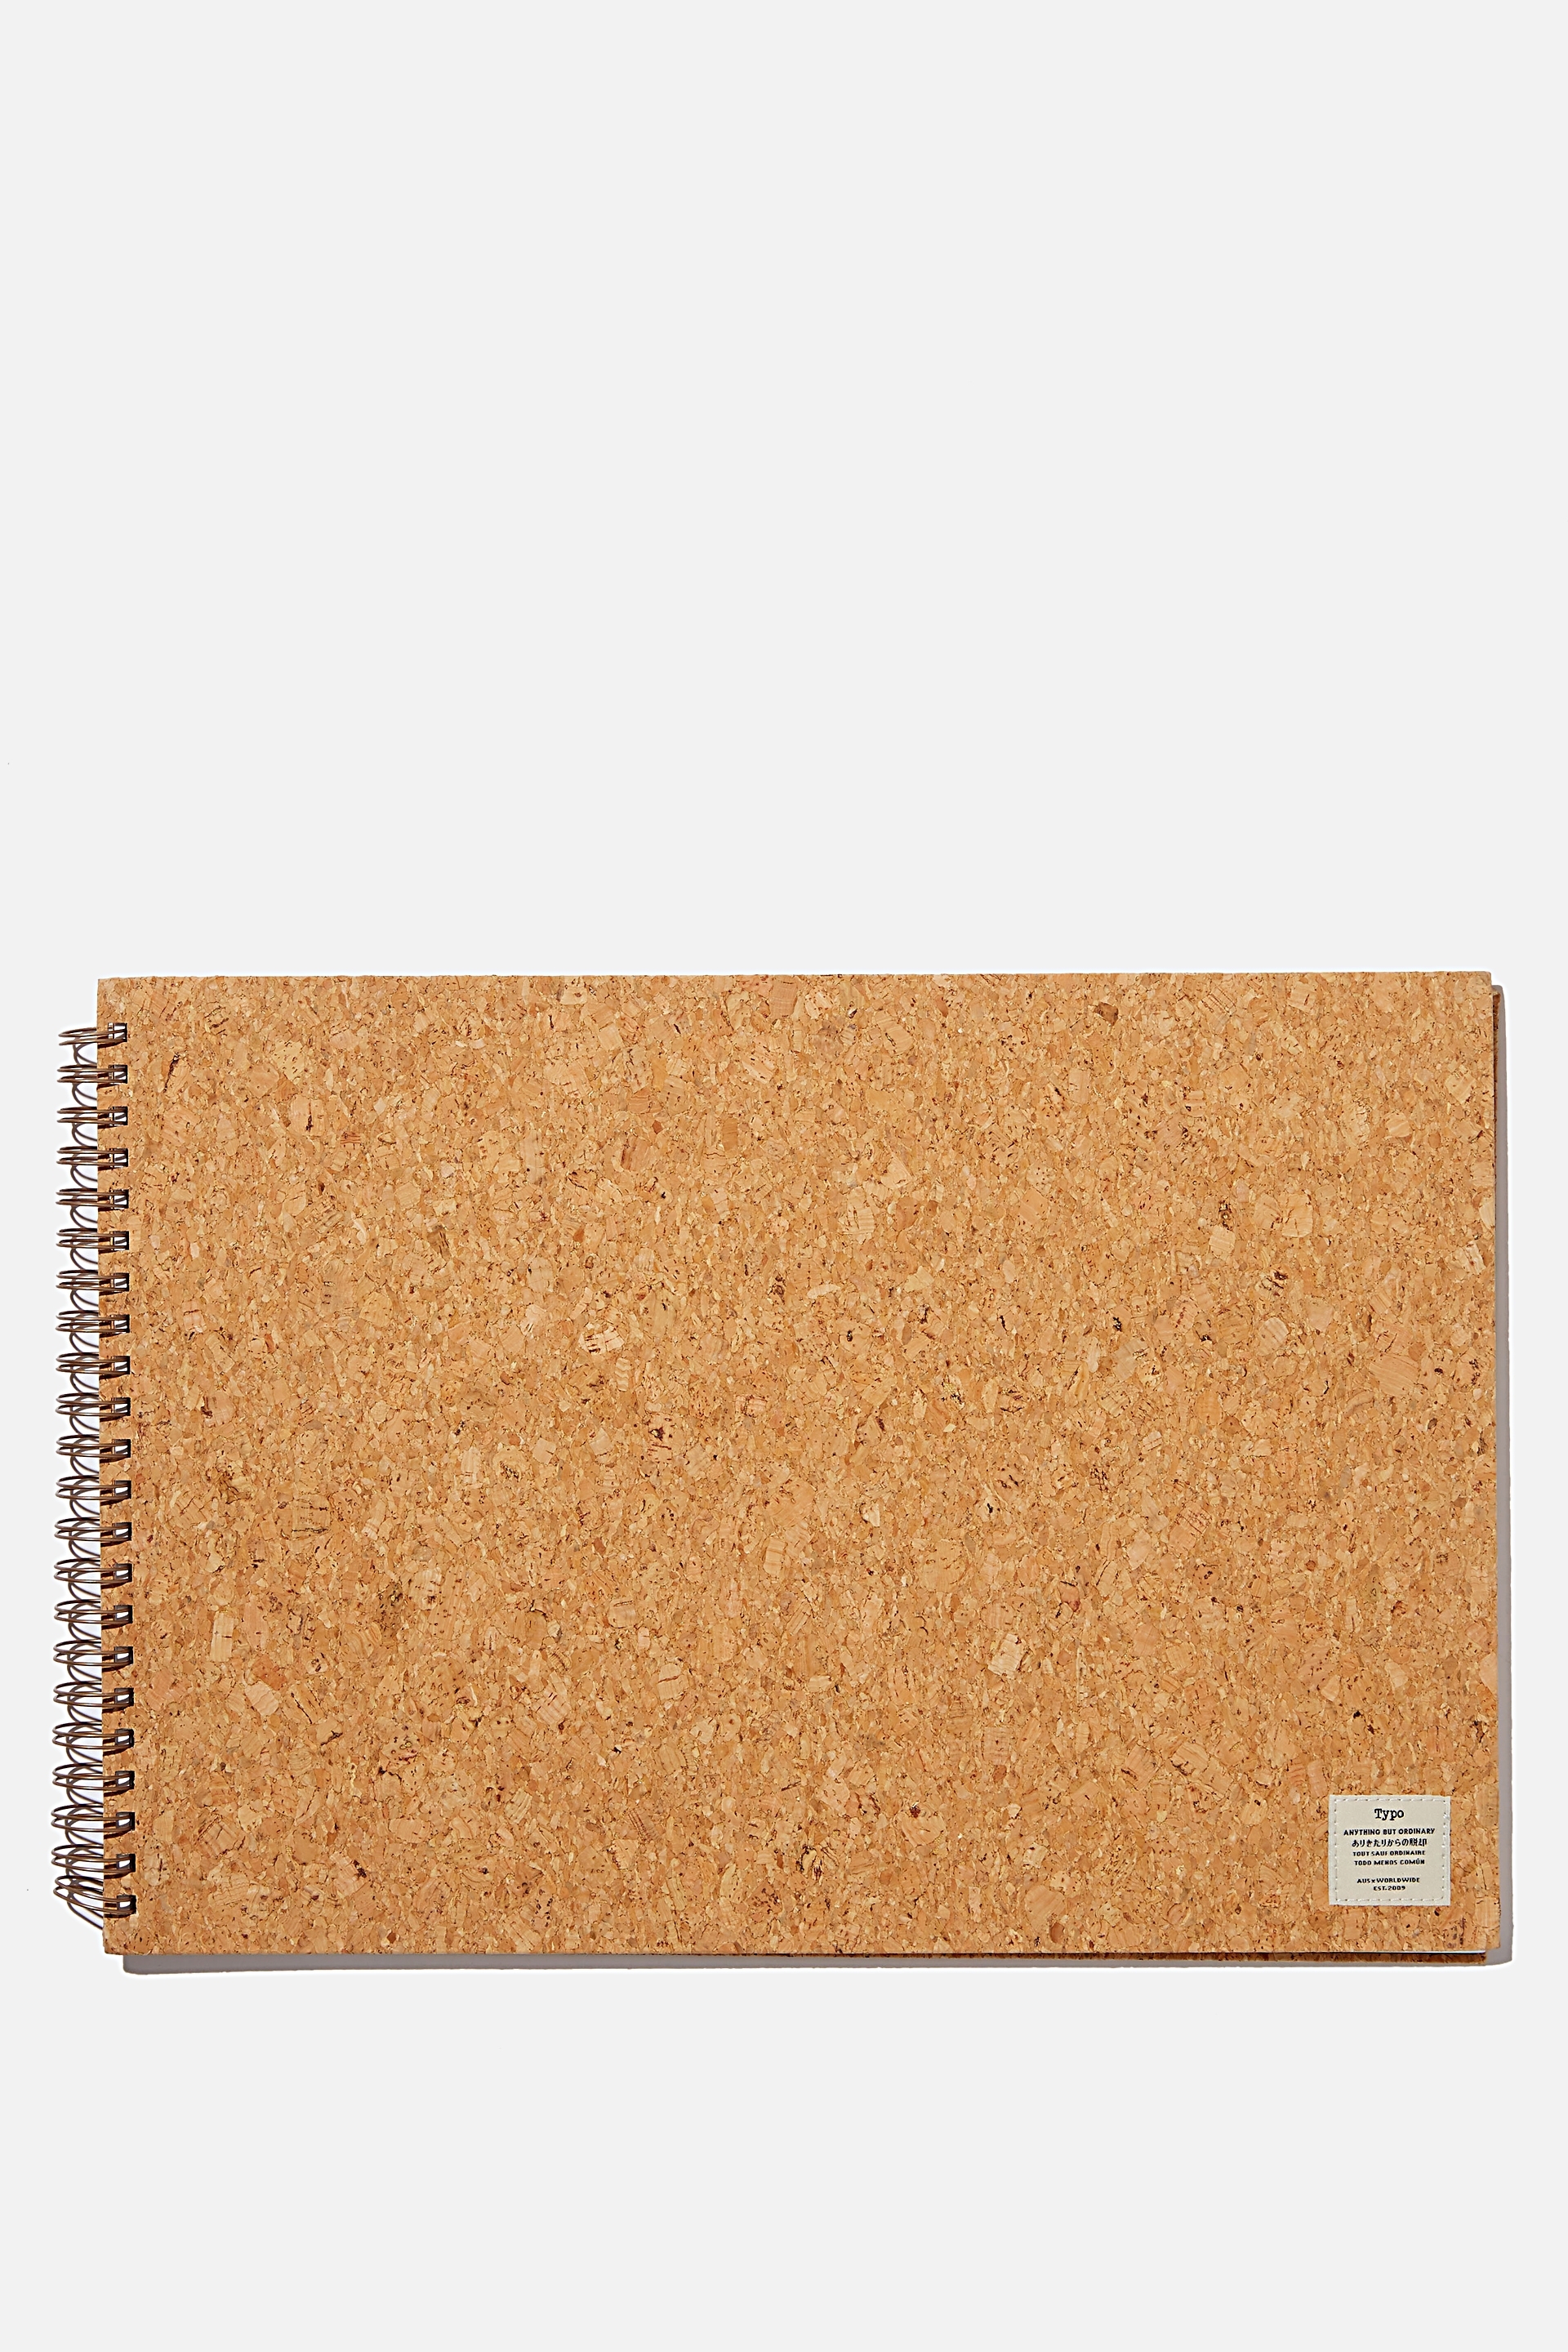 Typo - A3 Spiral Sketch Book - Natural cork